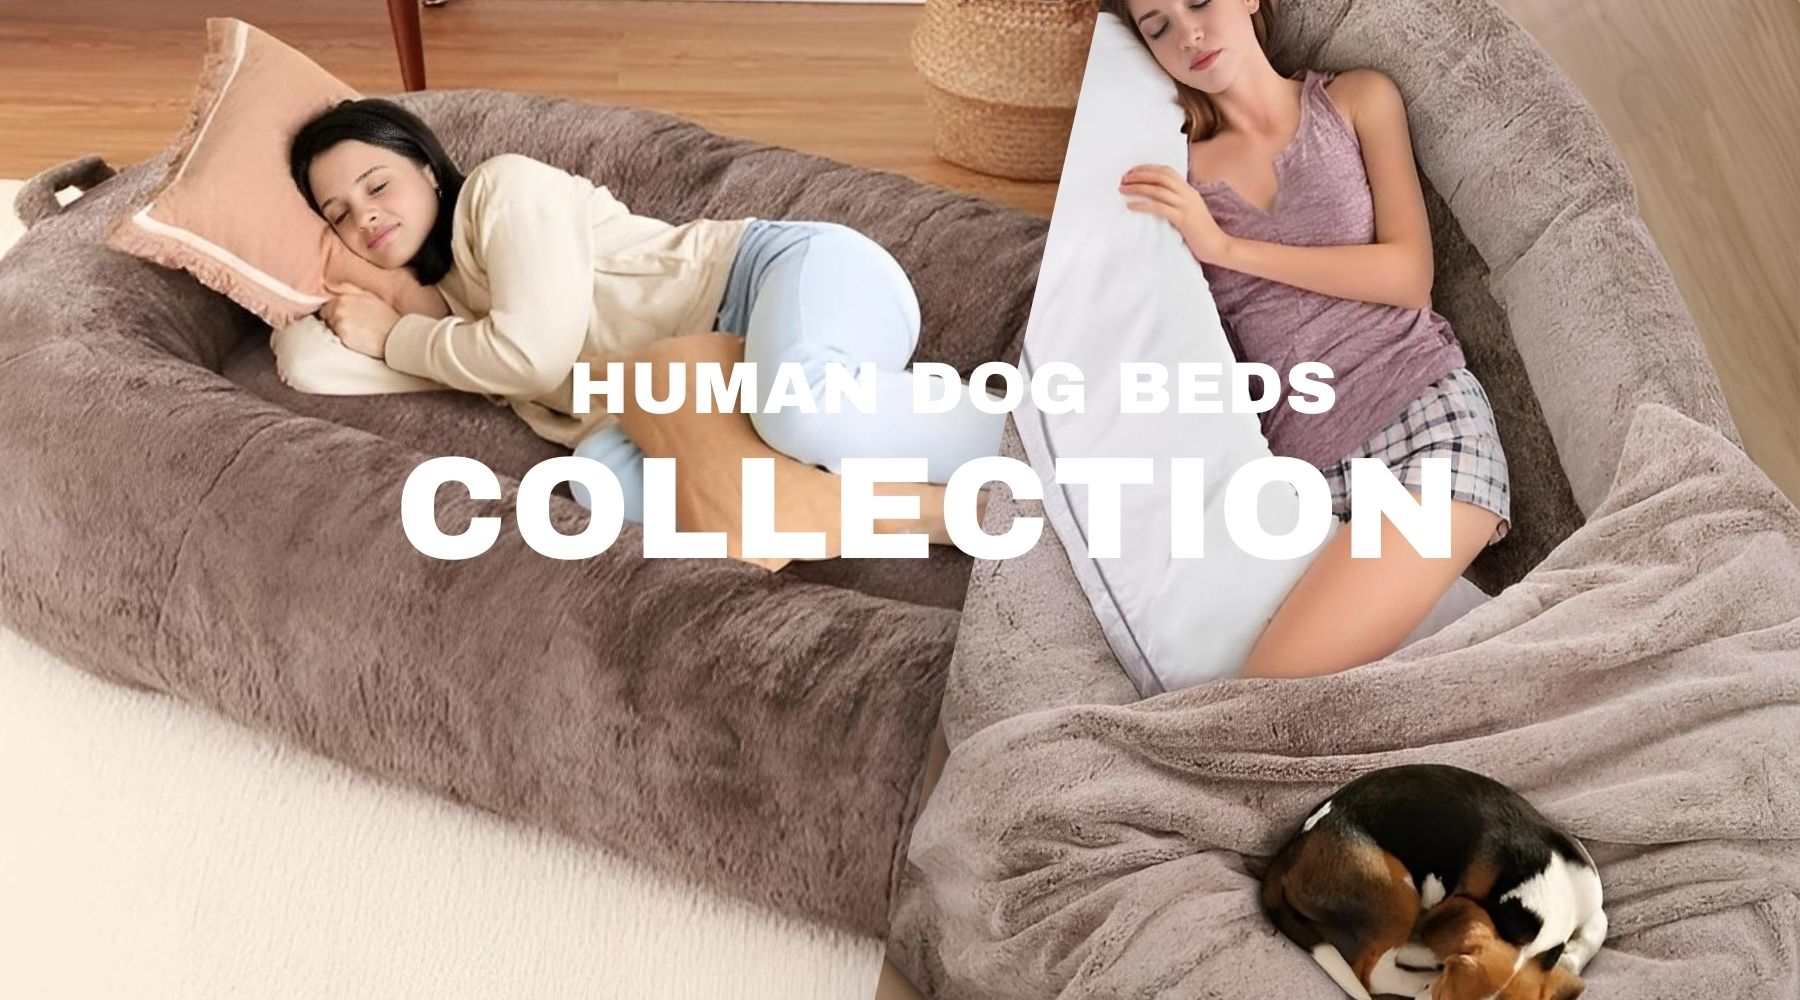 Human Dog Beds Collection